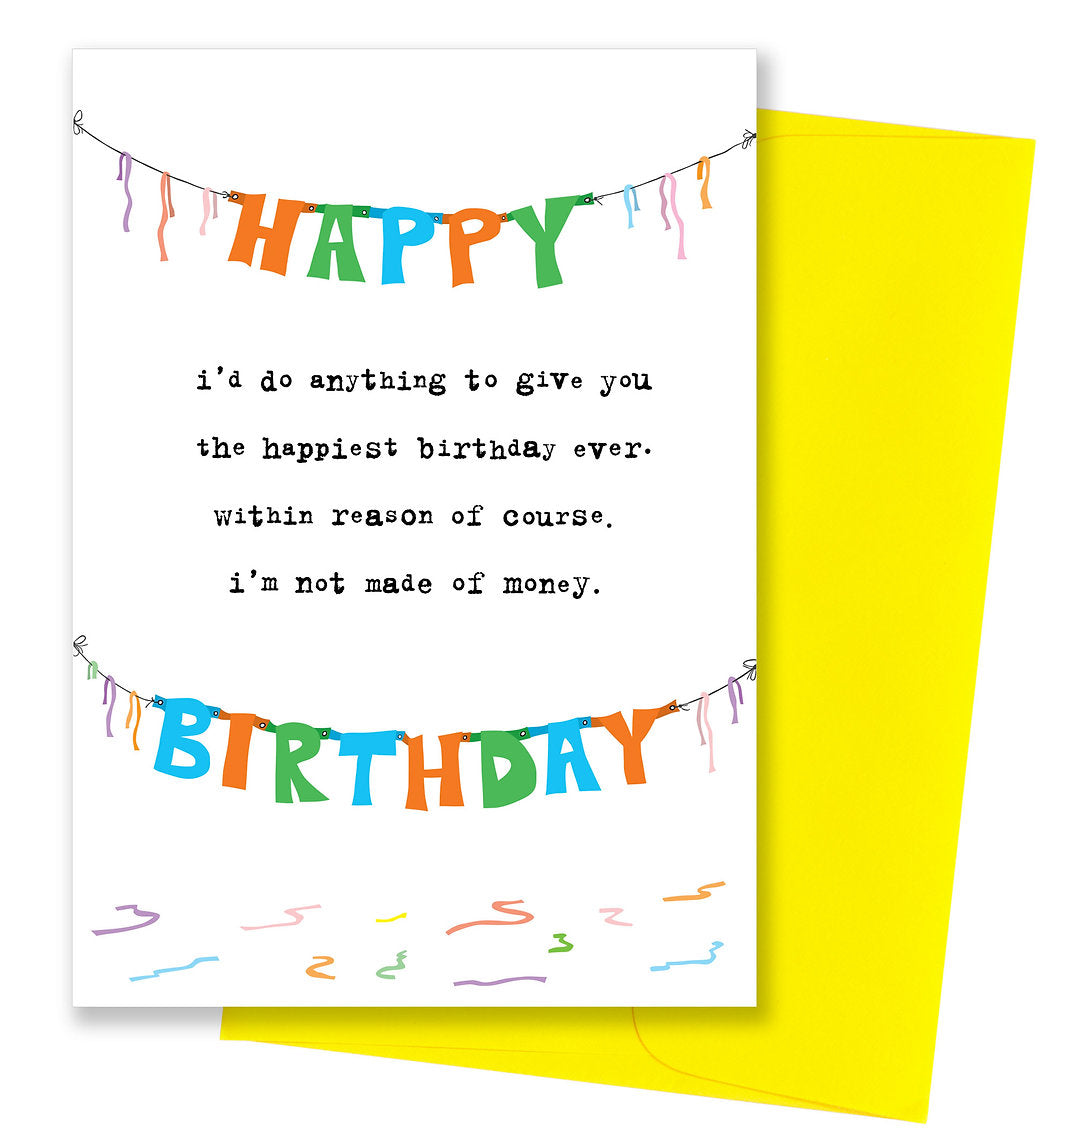 Happiest Birthday Ever - Birthday Card